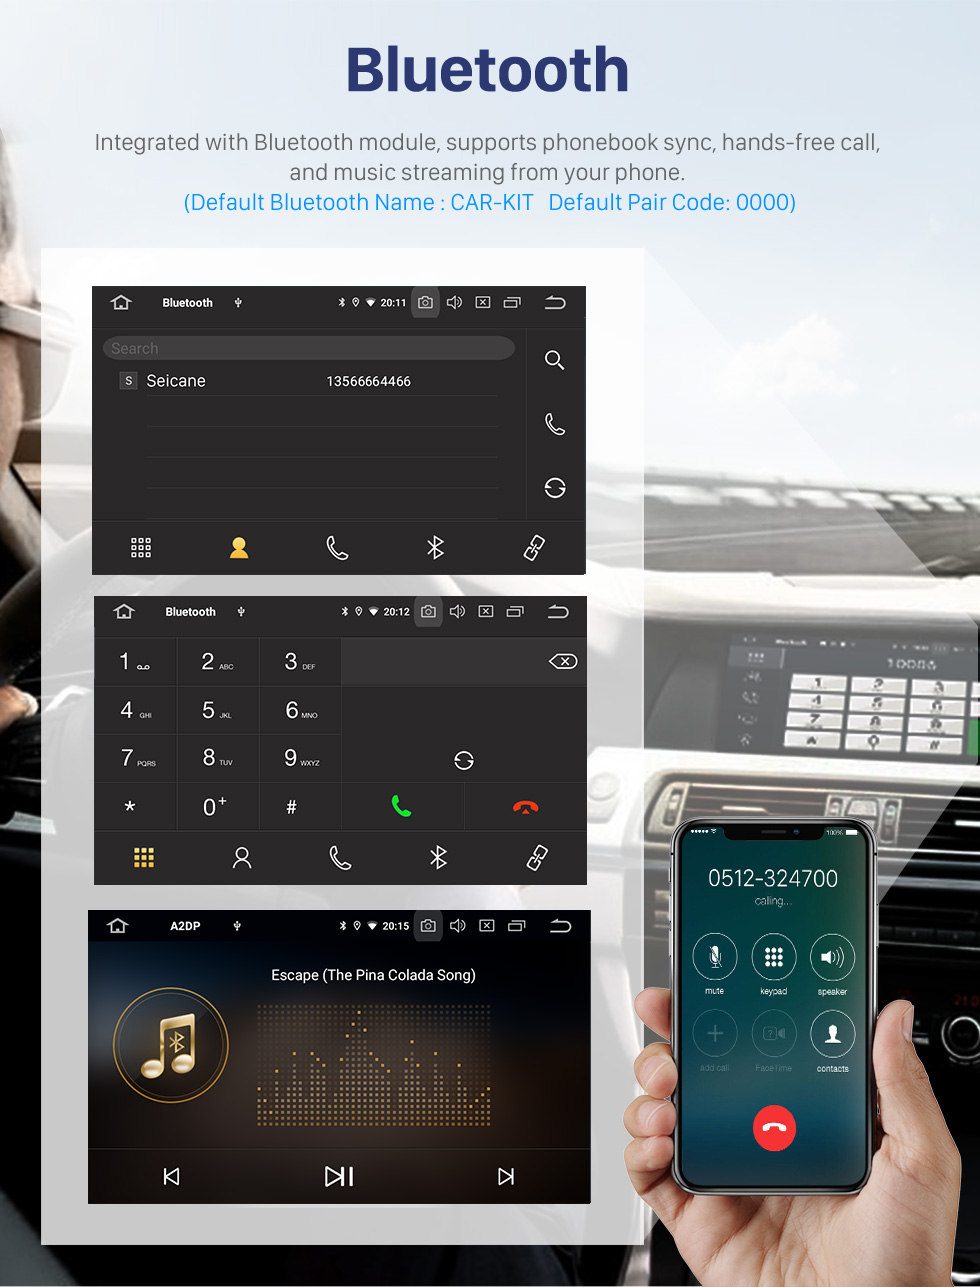 Seicane 9 Inch HD Touchscreen for 2004-2009 Subaru Legacy Autoradio Car Audio with GPS Car Radio Support Multiple OSD Languages 